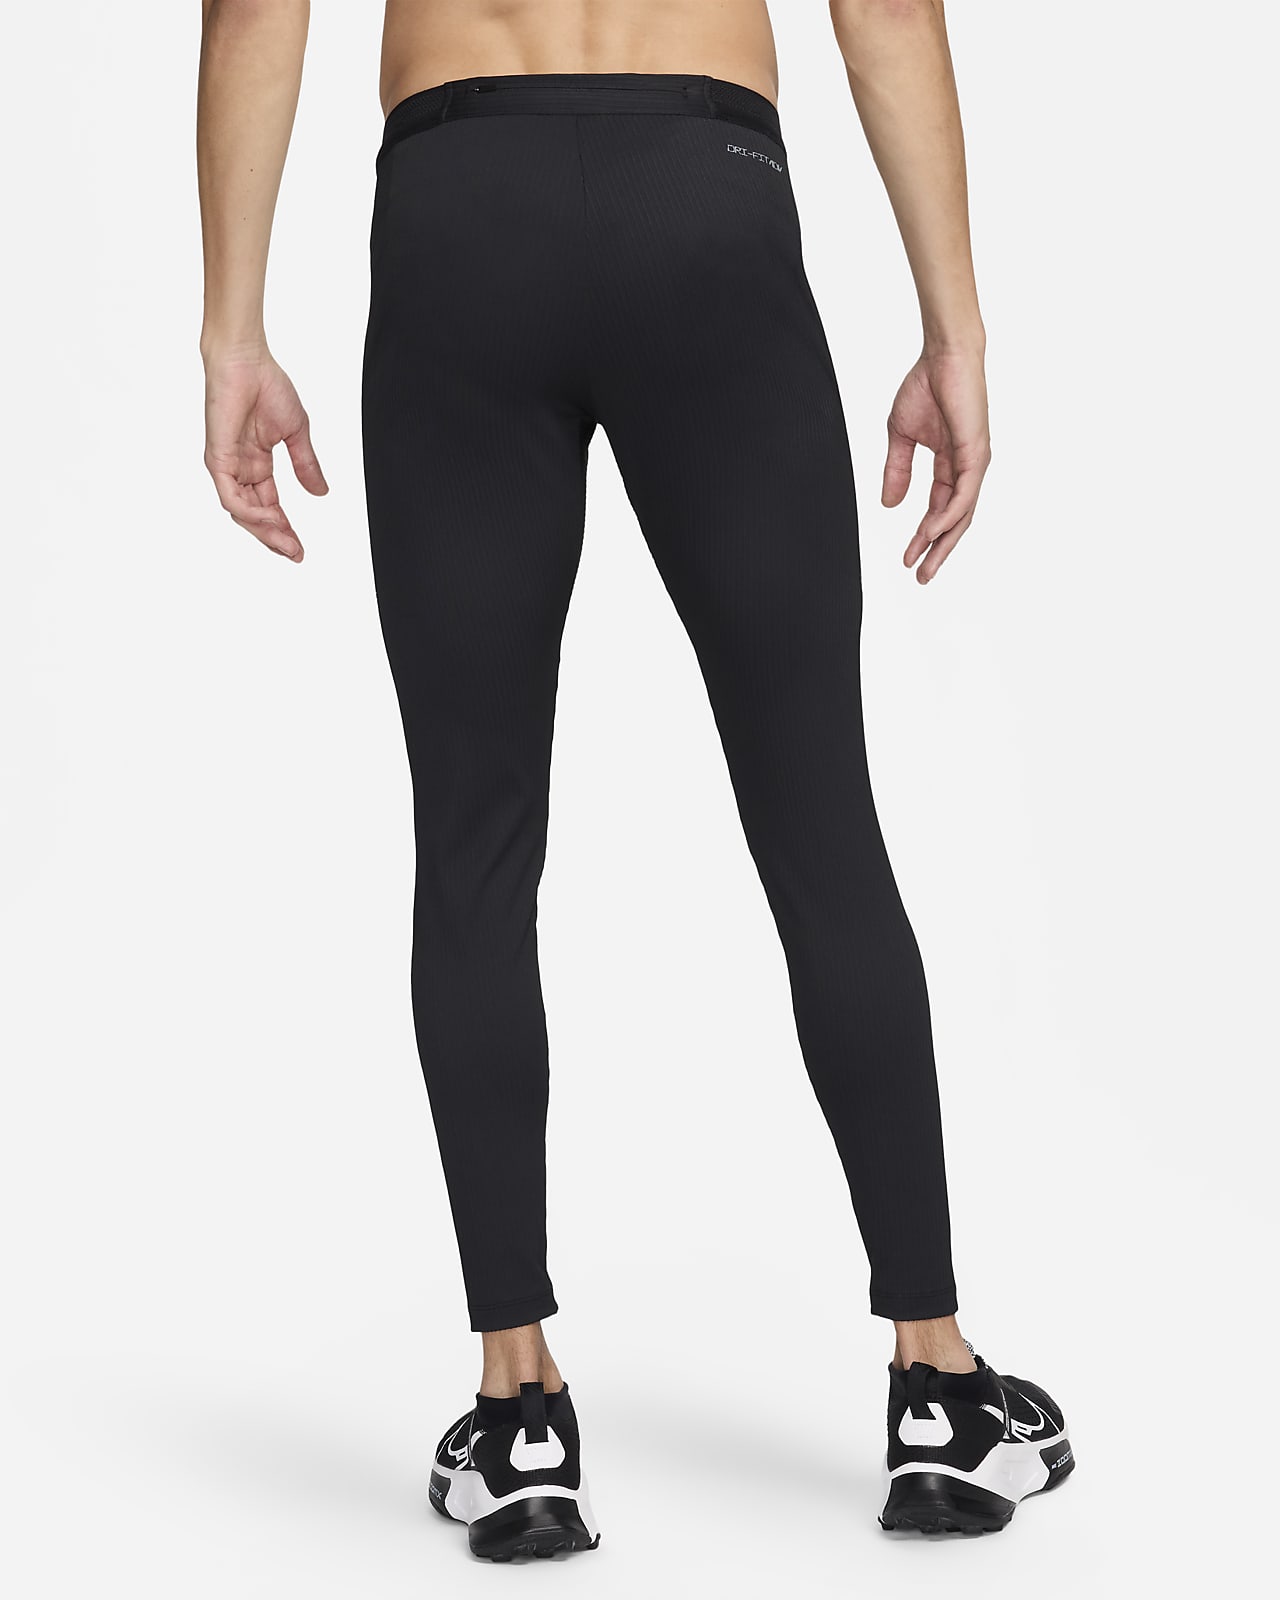 shop online discounted Nike Dri-FIT ADV AeroSwift Racer Running Pants Gray  Men Size XL DM4615-012 NWT